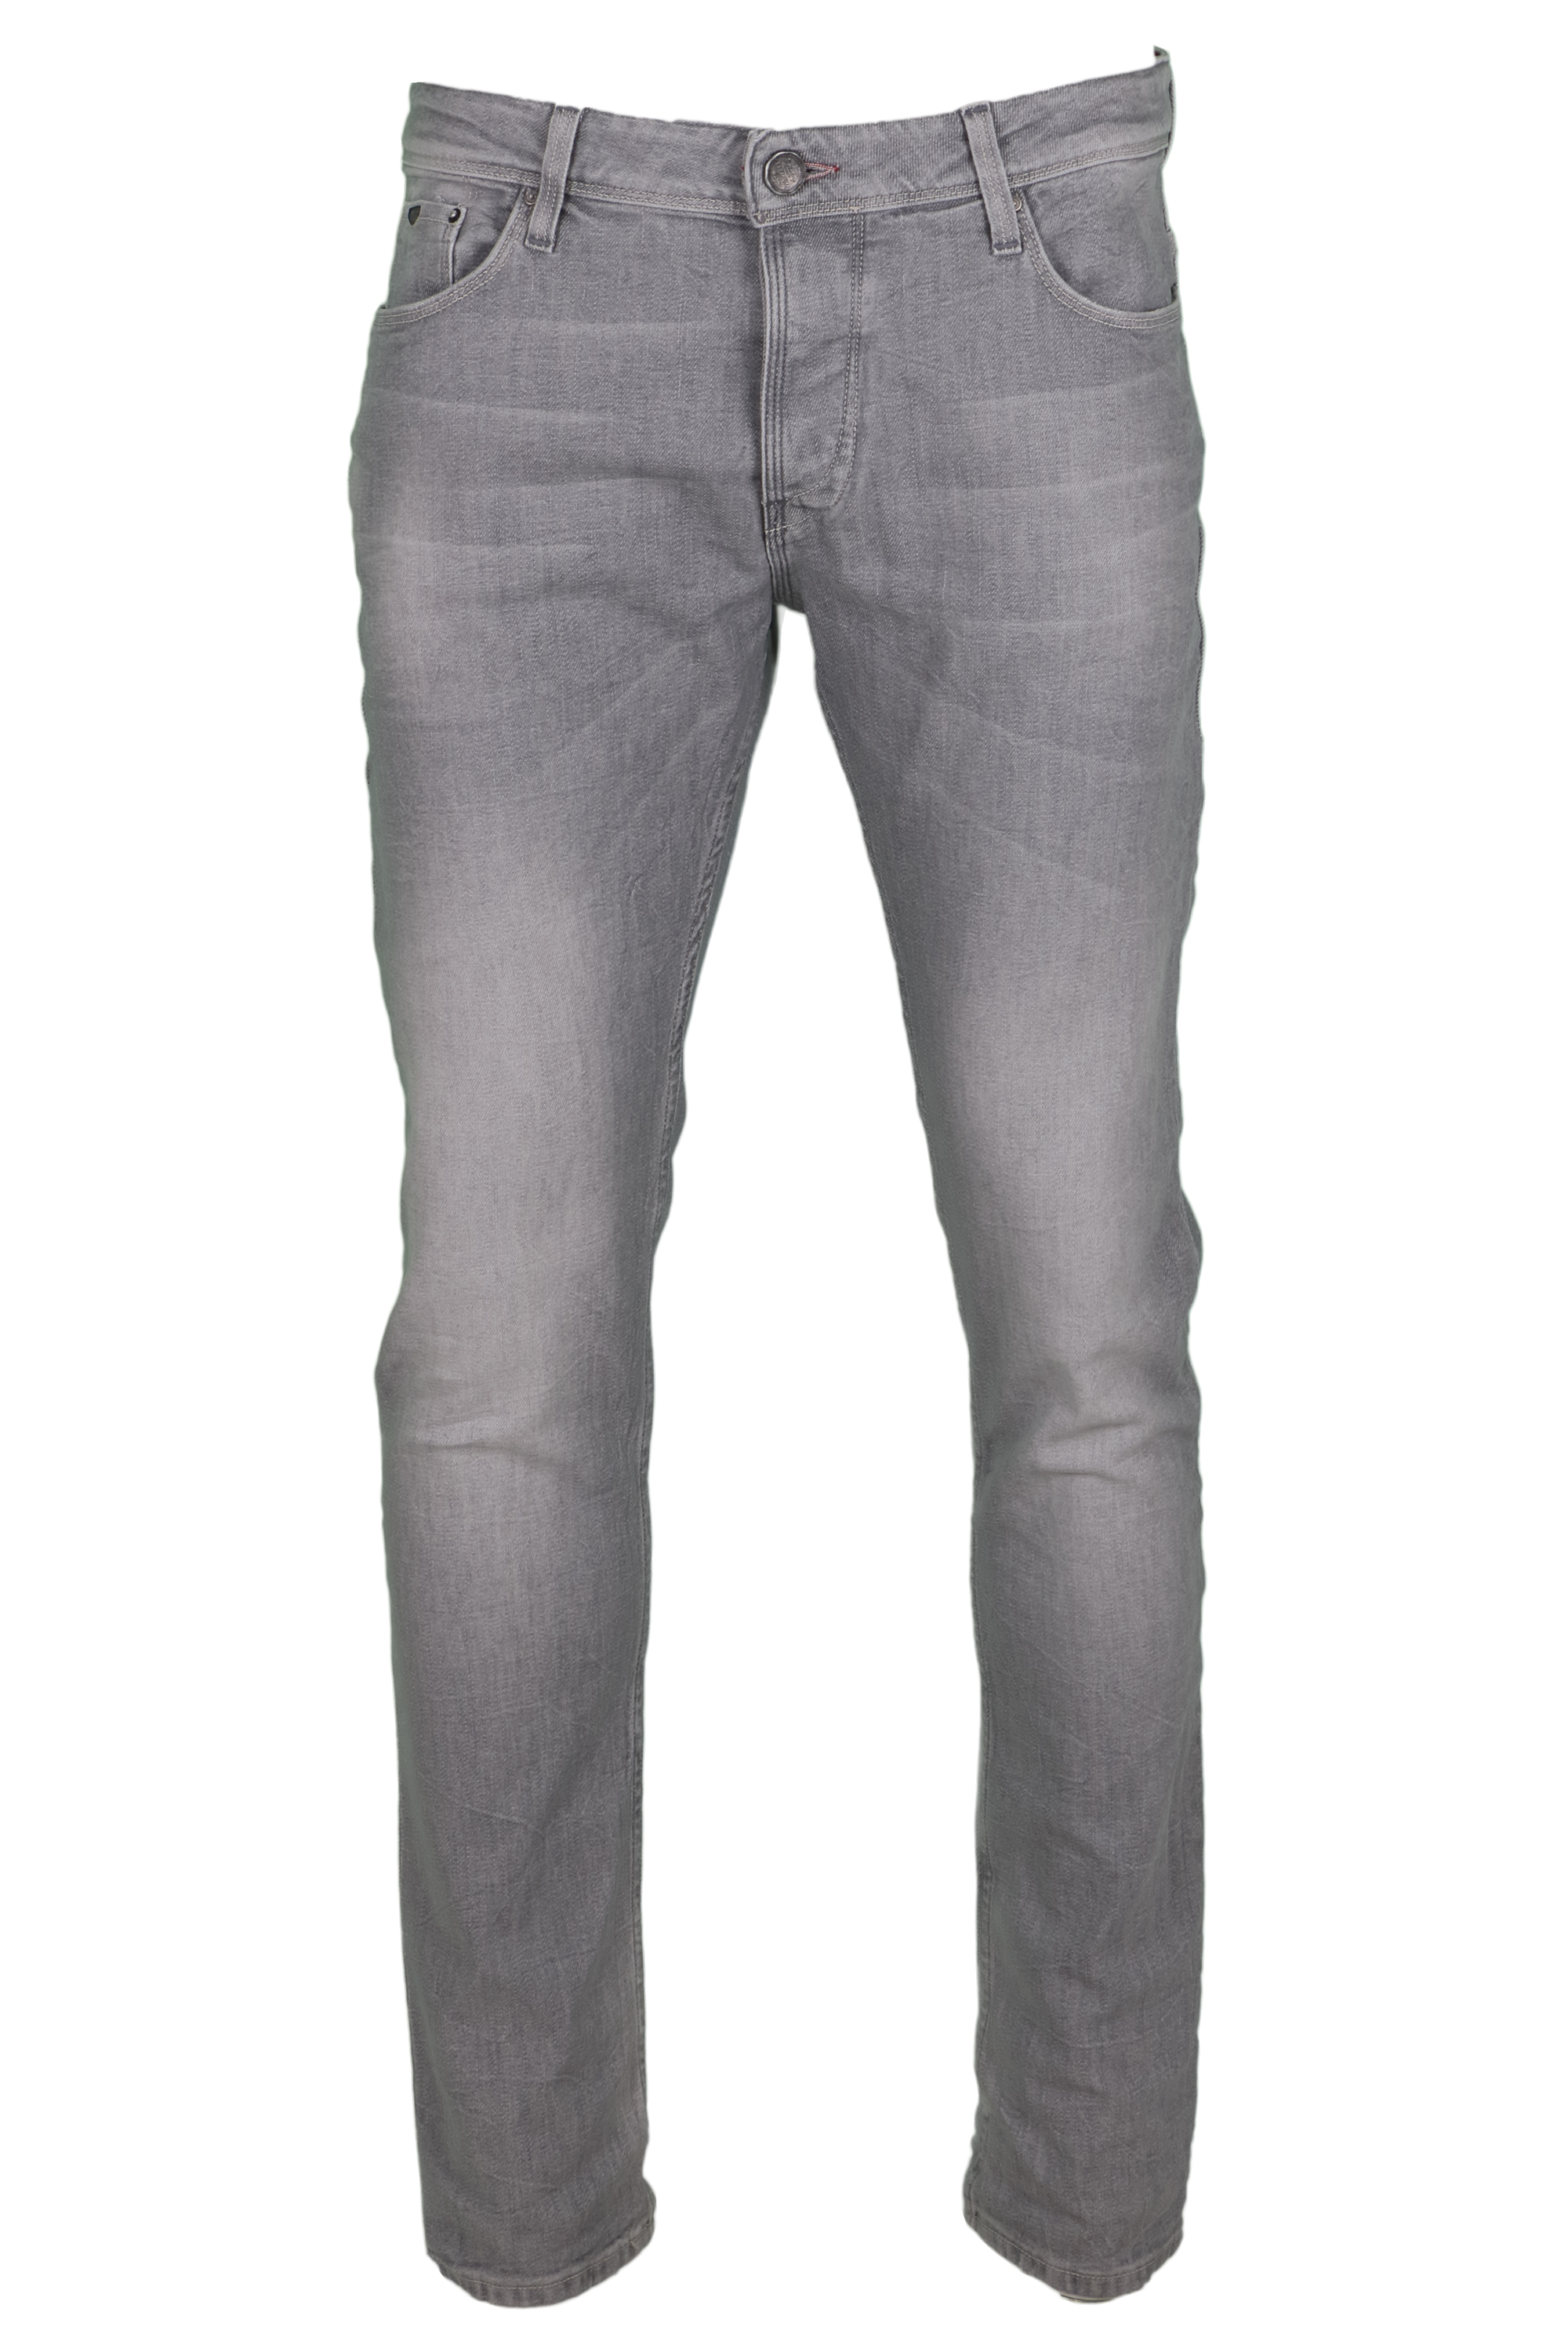 Salsa Herren Jeans Tapered Lima - light grey 36/34